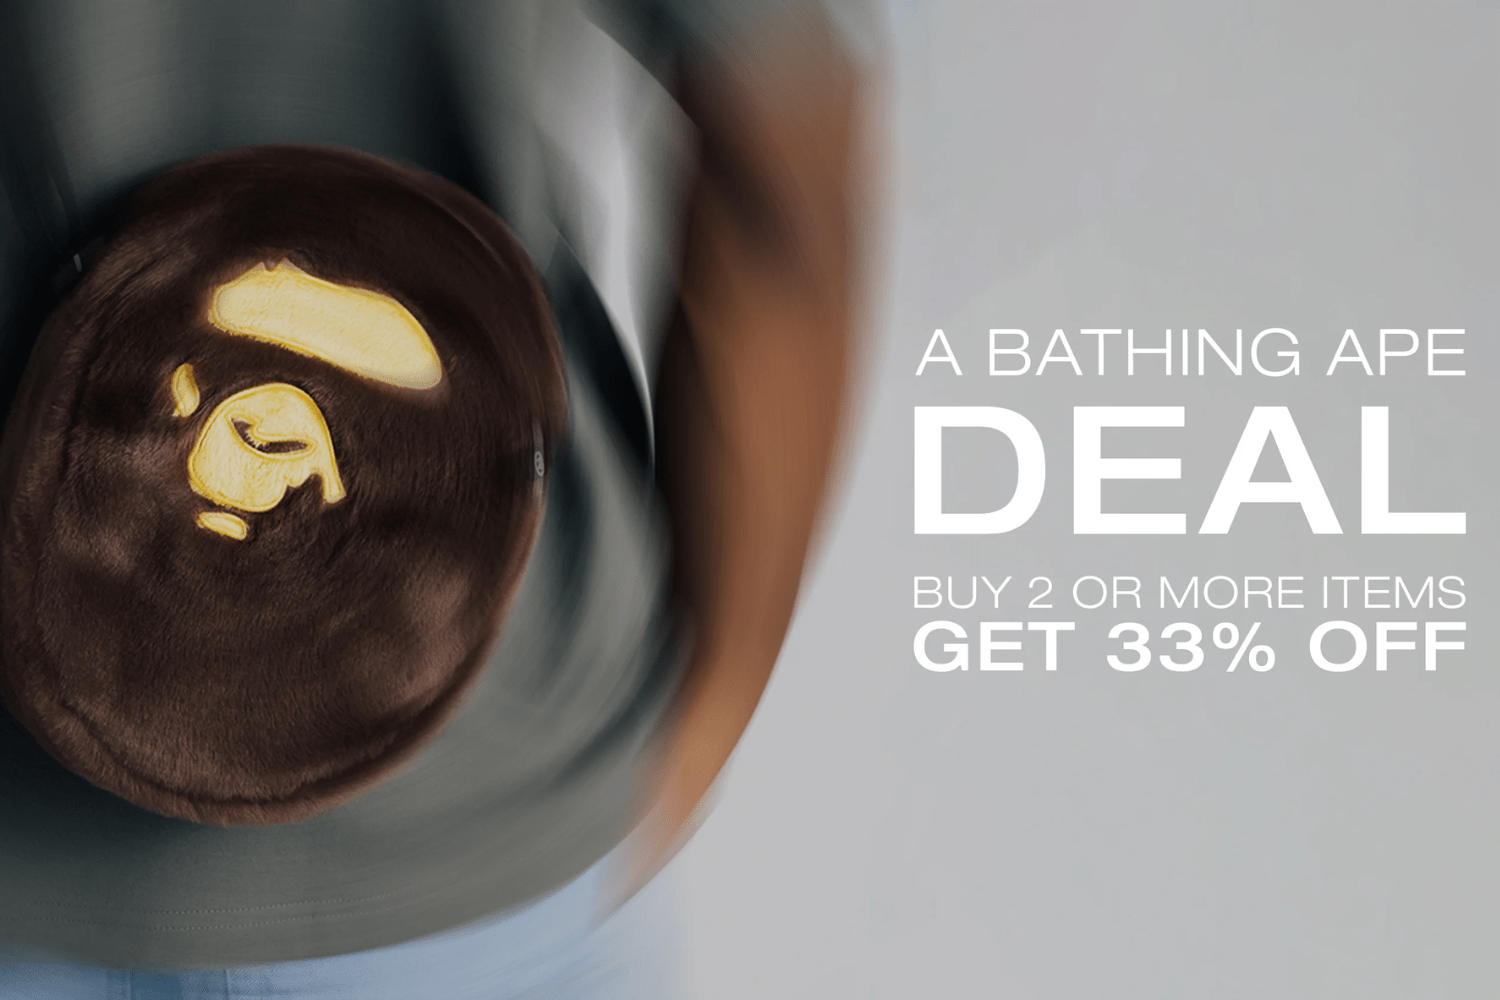 Enjoy a 33% discount on BAPE items at solebox